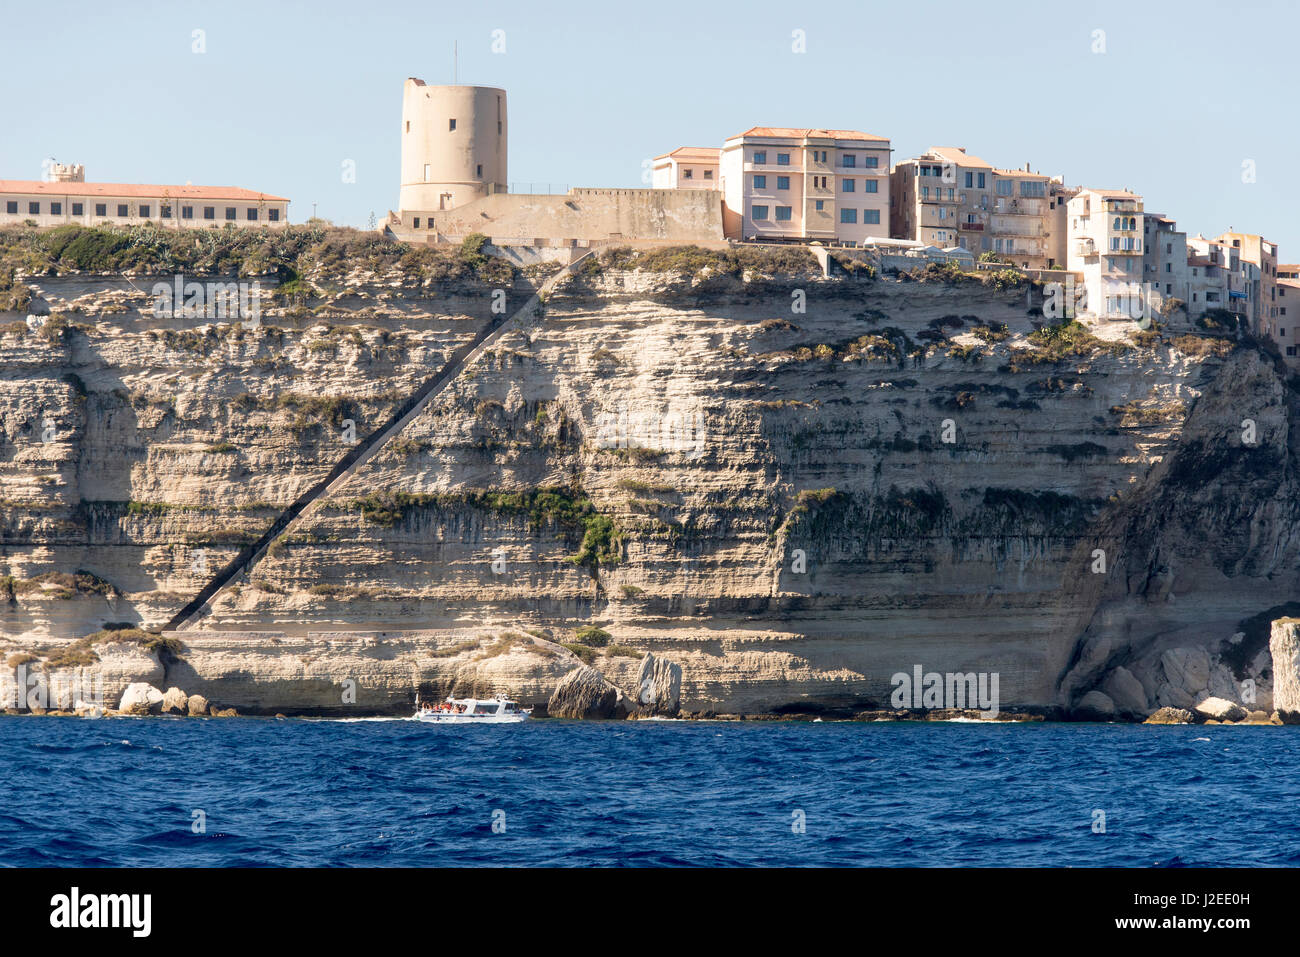 Europe, France, Corsica. Bonifacio cliffs. Tour boat passes stair way carved into side. King Aragon steps (Escalier du Roi d'Aragon) Stock Photo